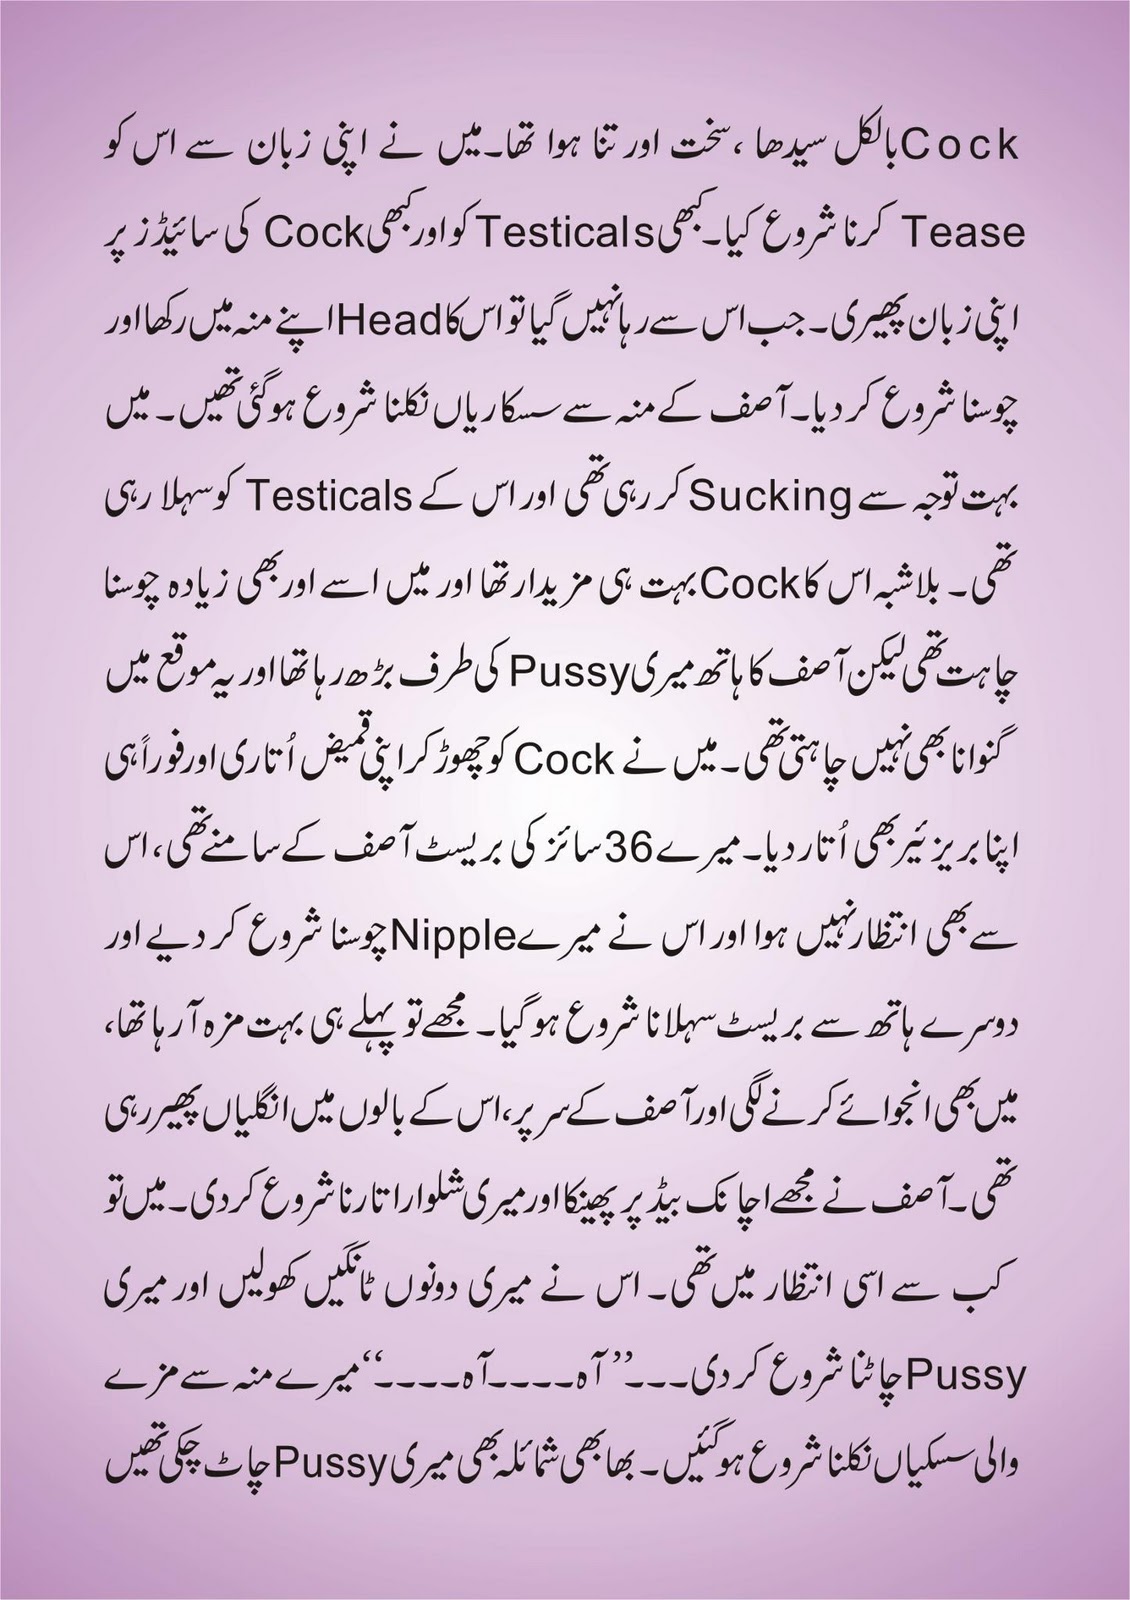 Urdu Erotic Stories From Subcontinent 45